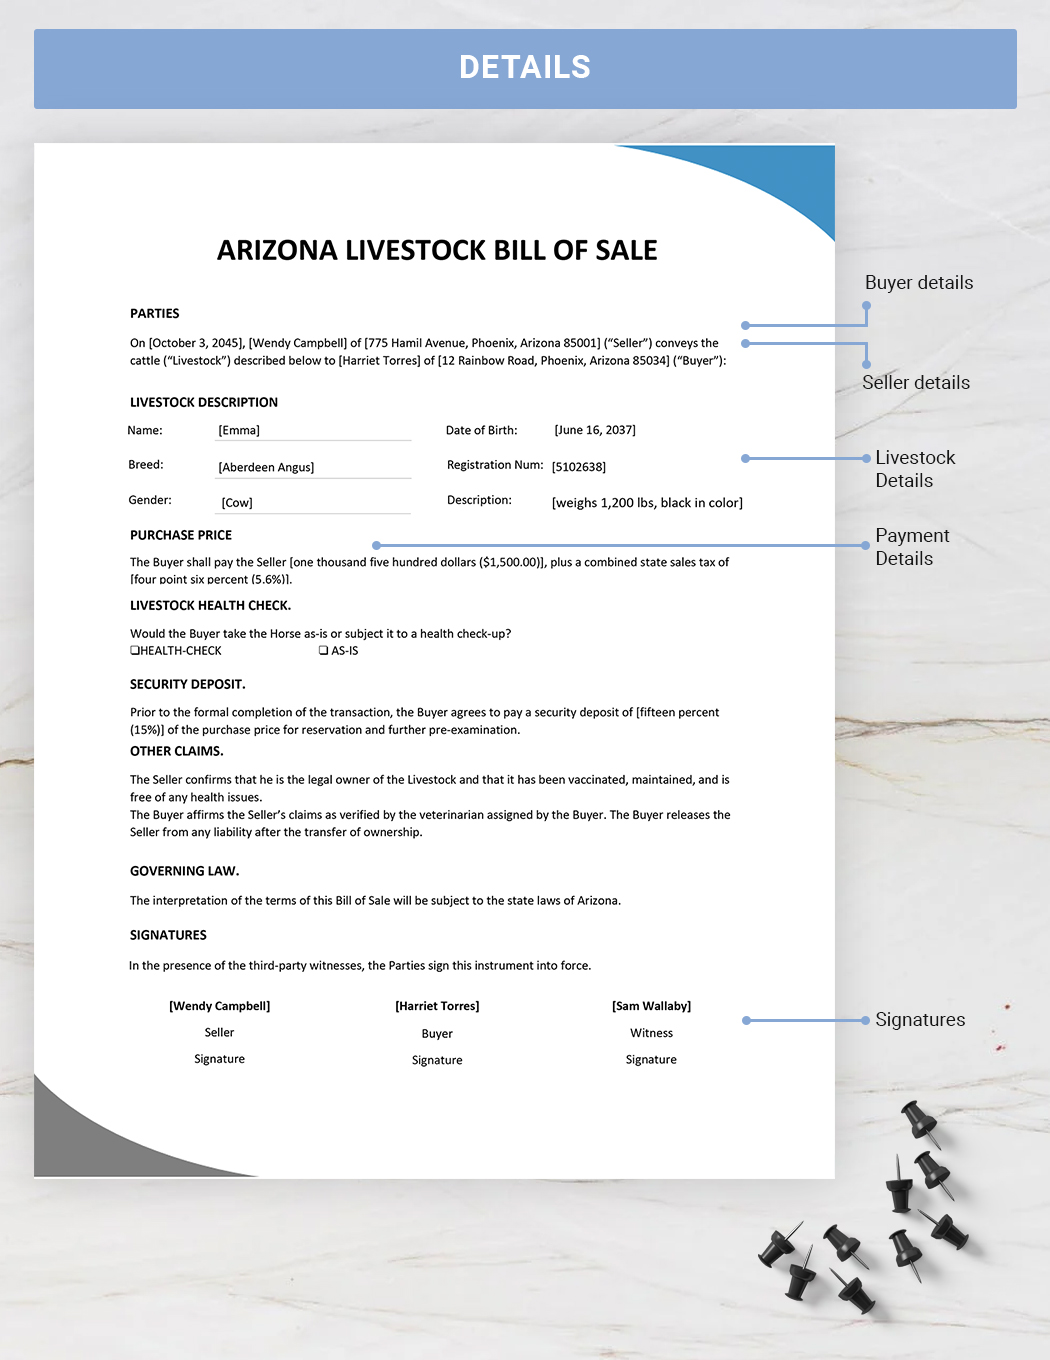 Arizona Livestock Bill of Sale Form Template